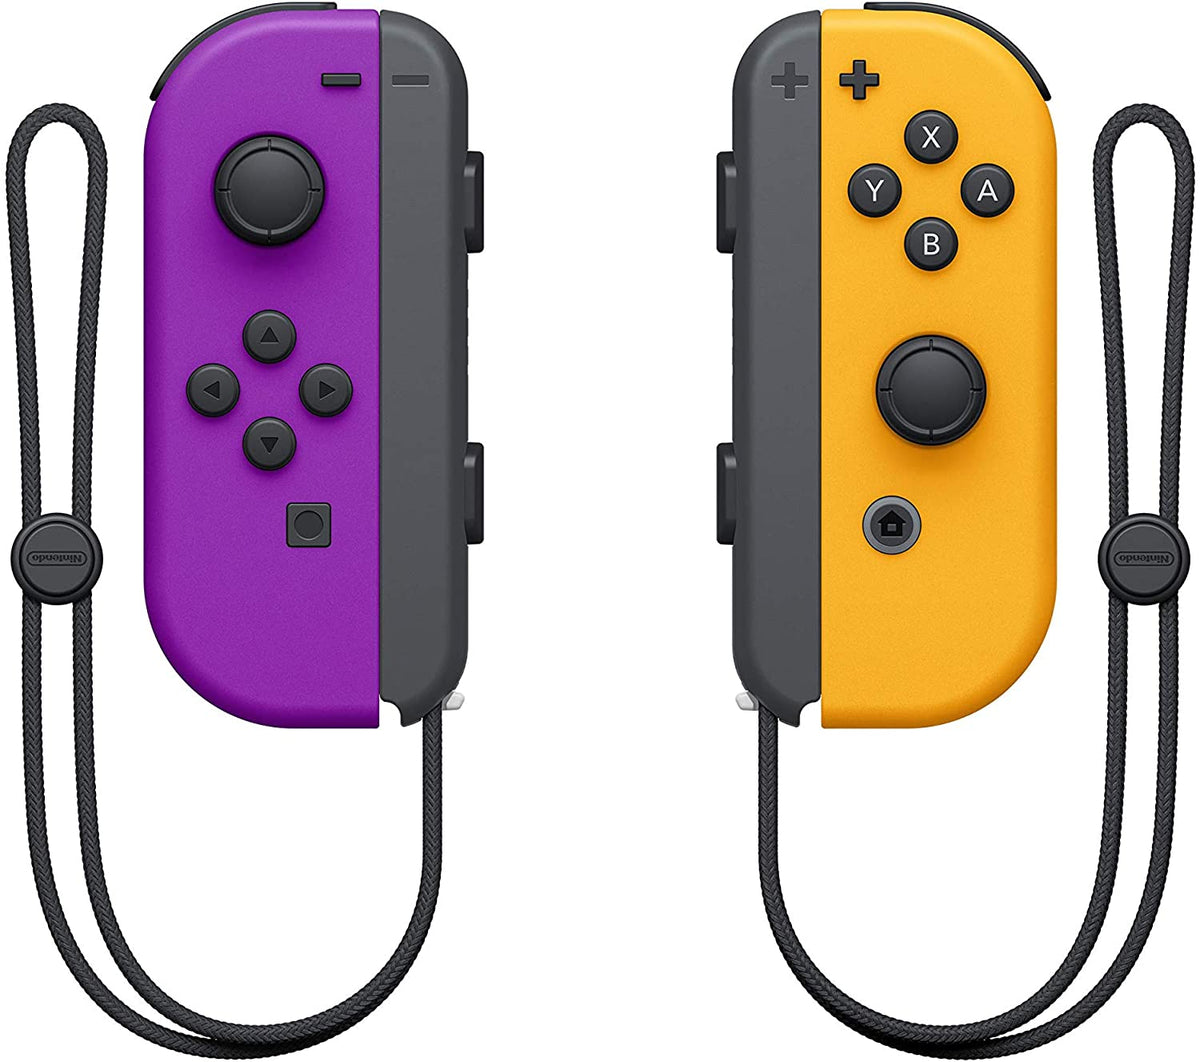 Nintendo Switch: Joy-Con Pair - Neon Purple/Neon Orange Controllers